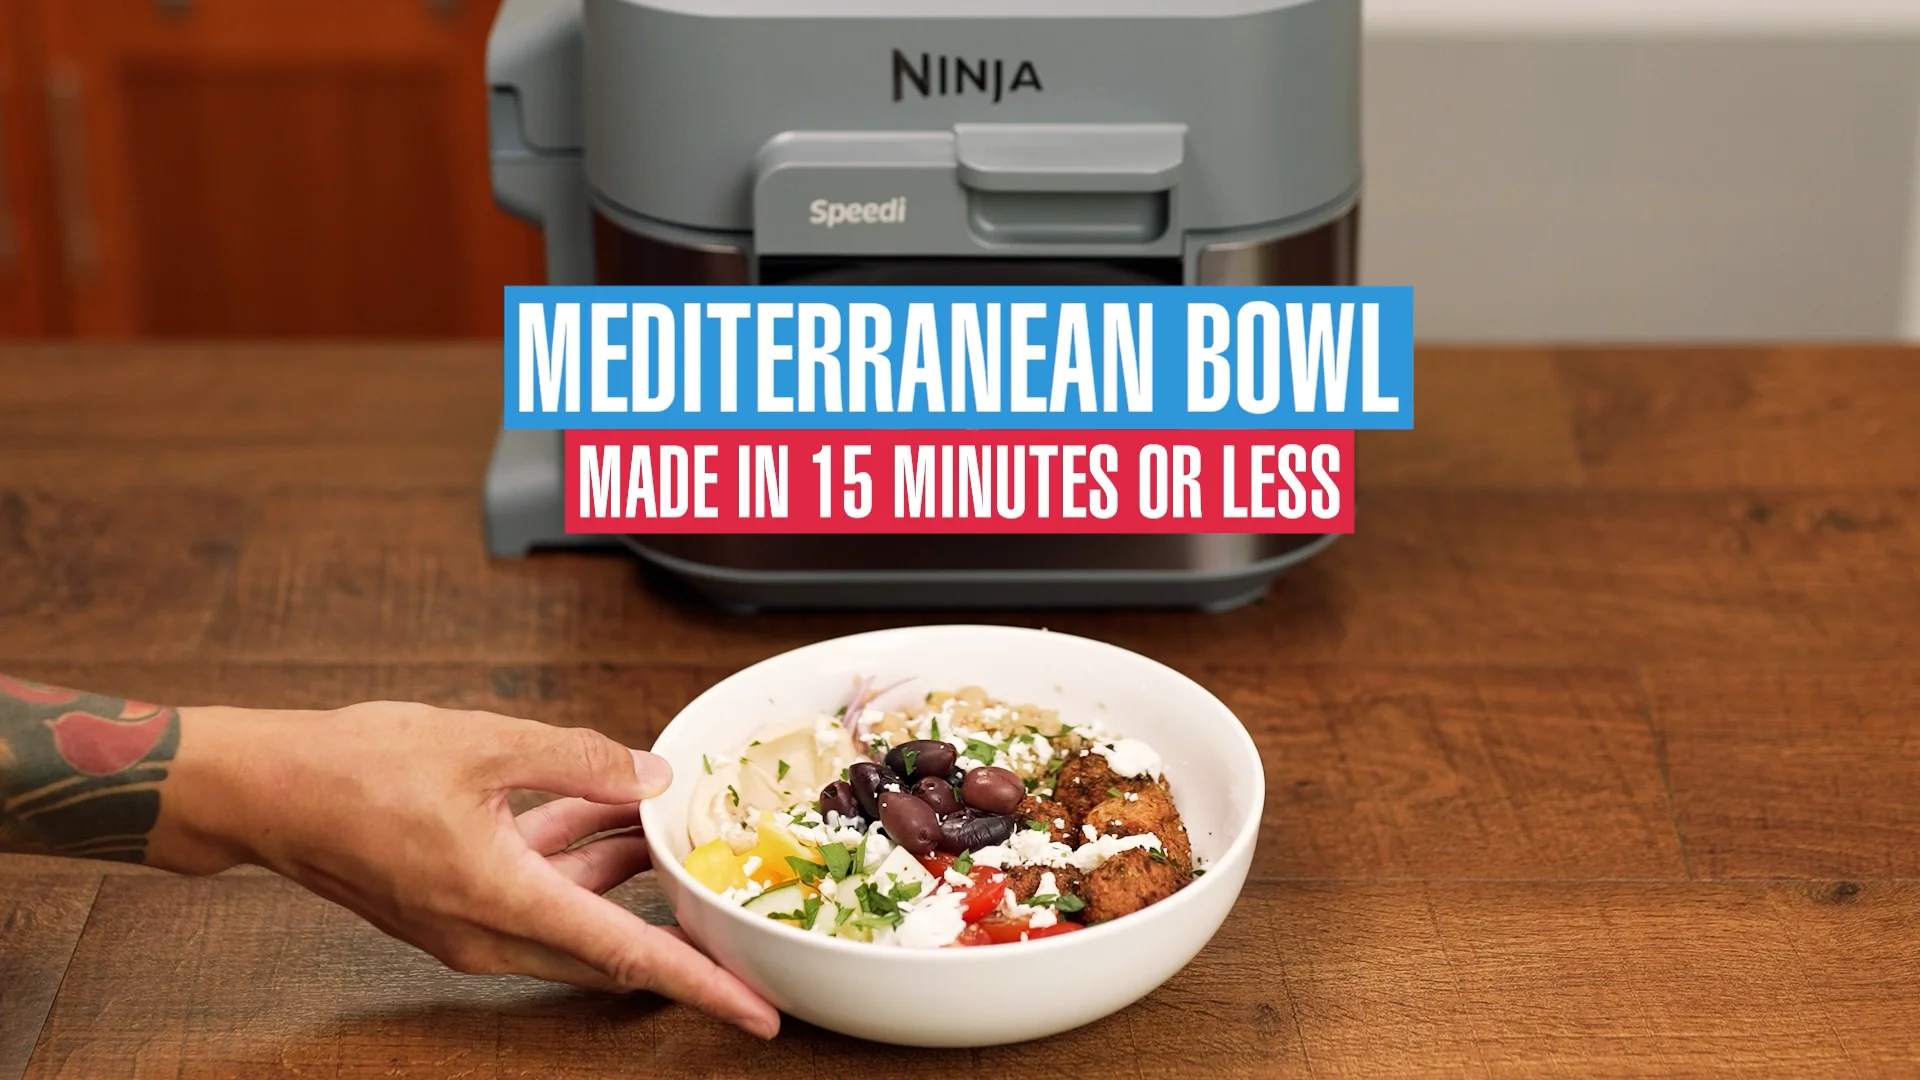 How to Make a Mediterranean Bowl in the Ninja Speedi™ on Vimeo